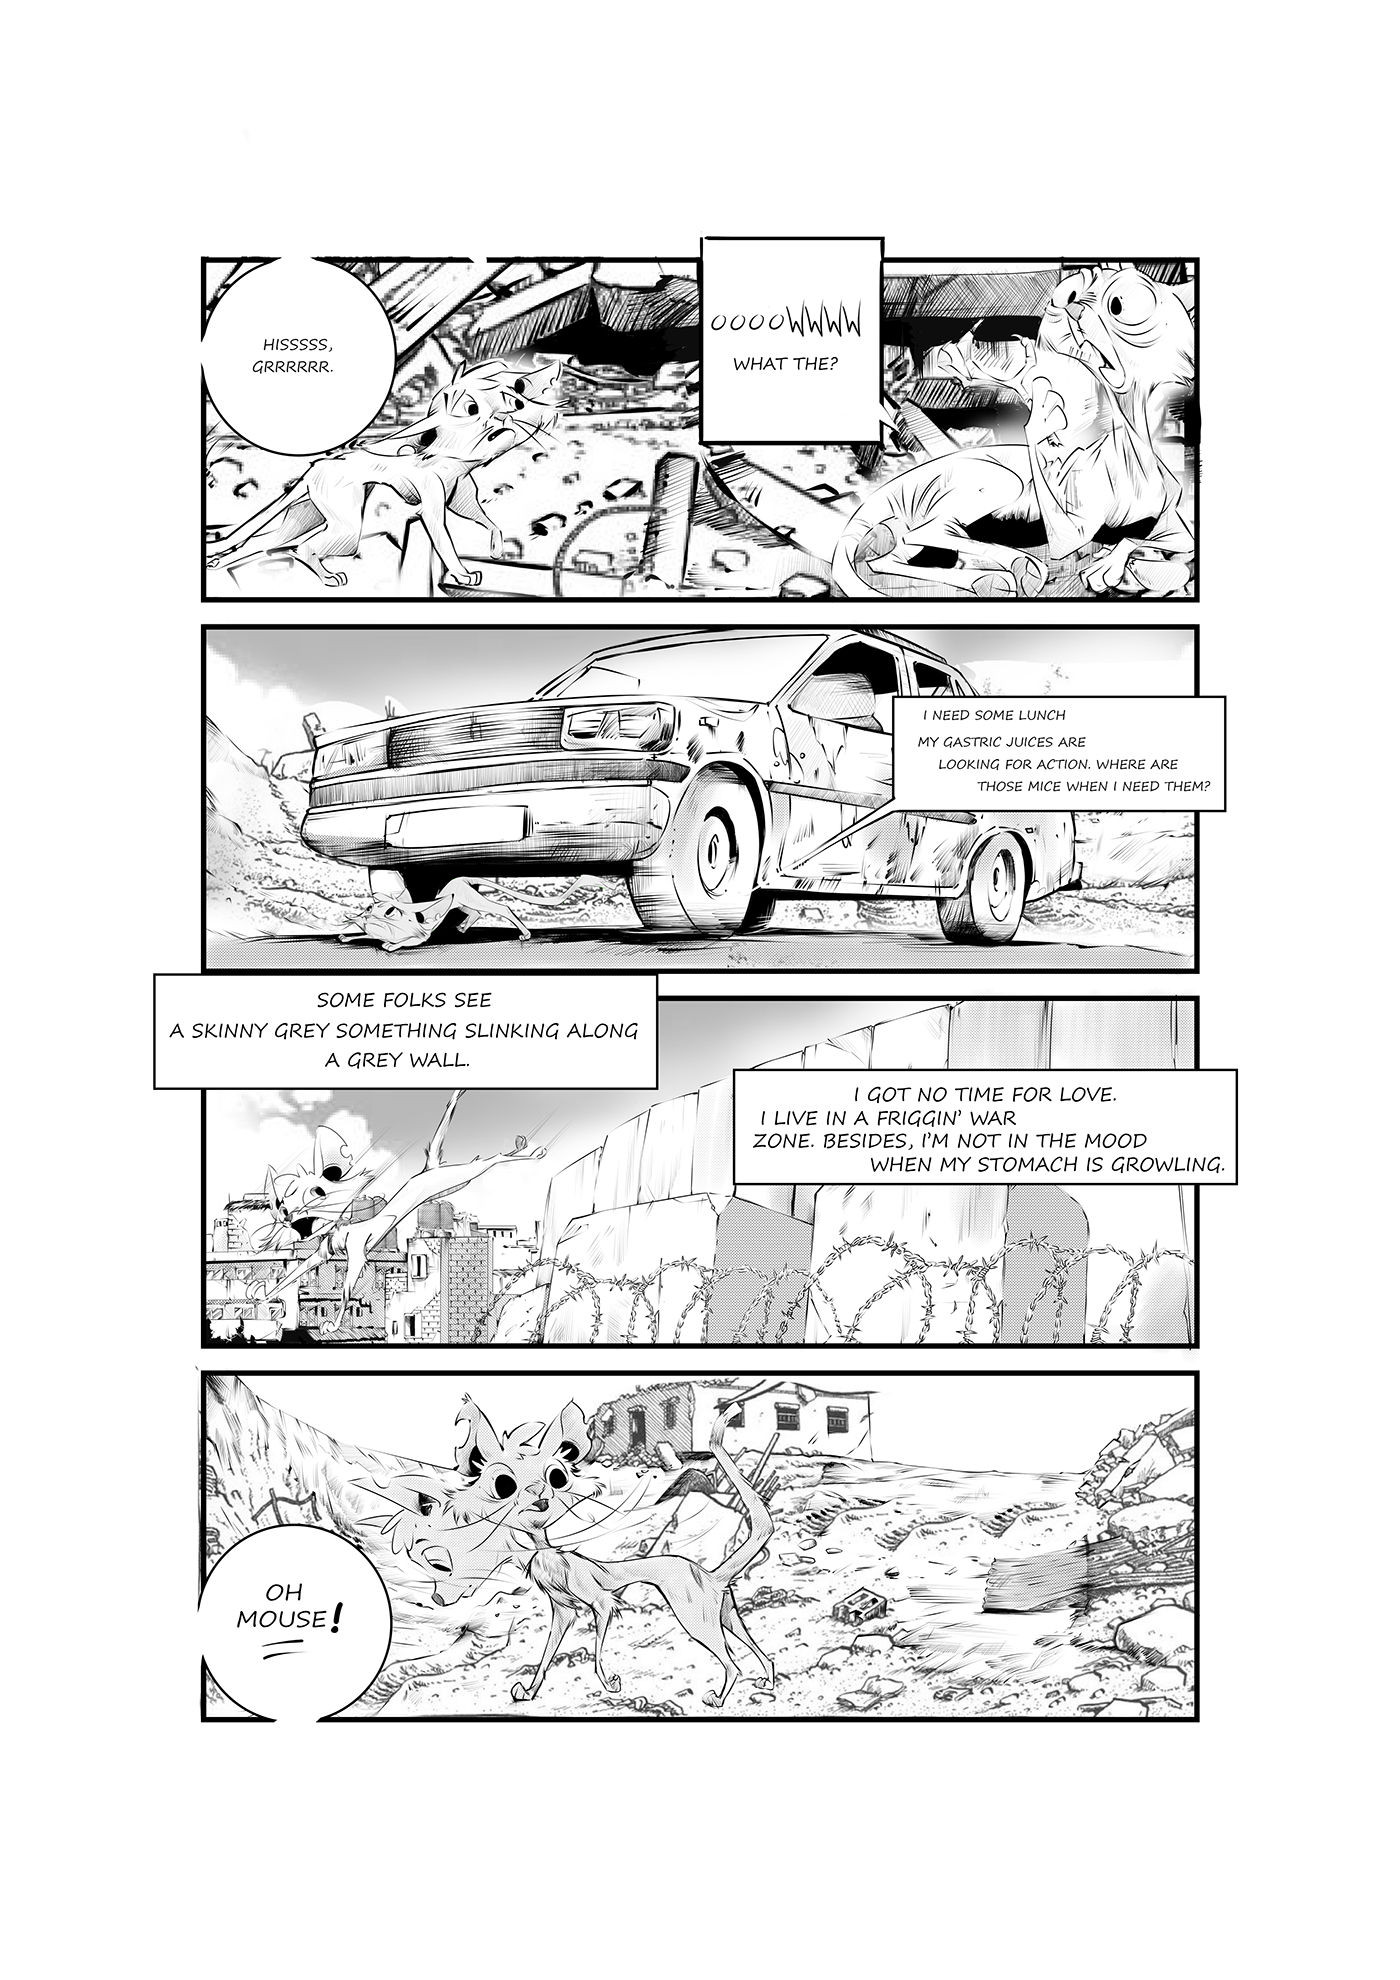 cartoon comic manga anime artwork sketch